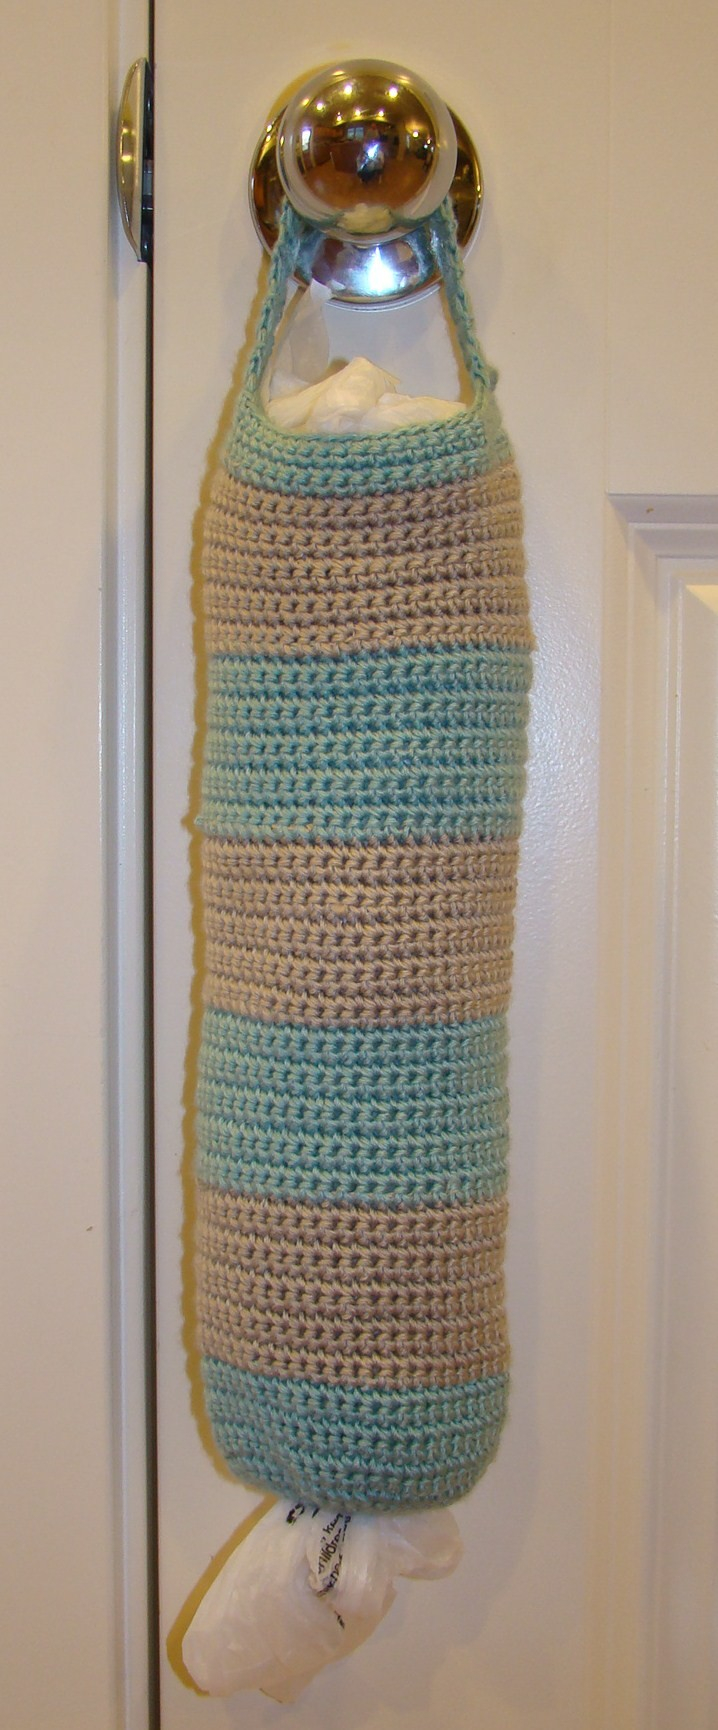 Crochet Holder Pattern Plastic Bags Mess Make Your Own Crochet Bag Holder Knit And